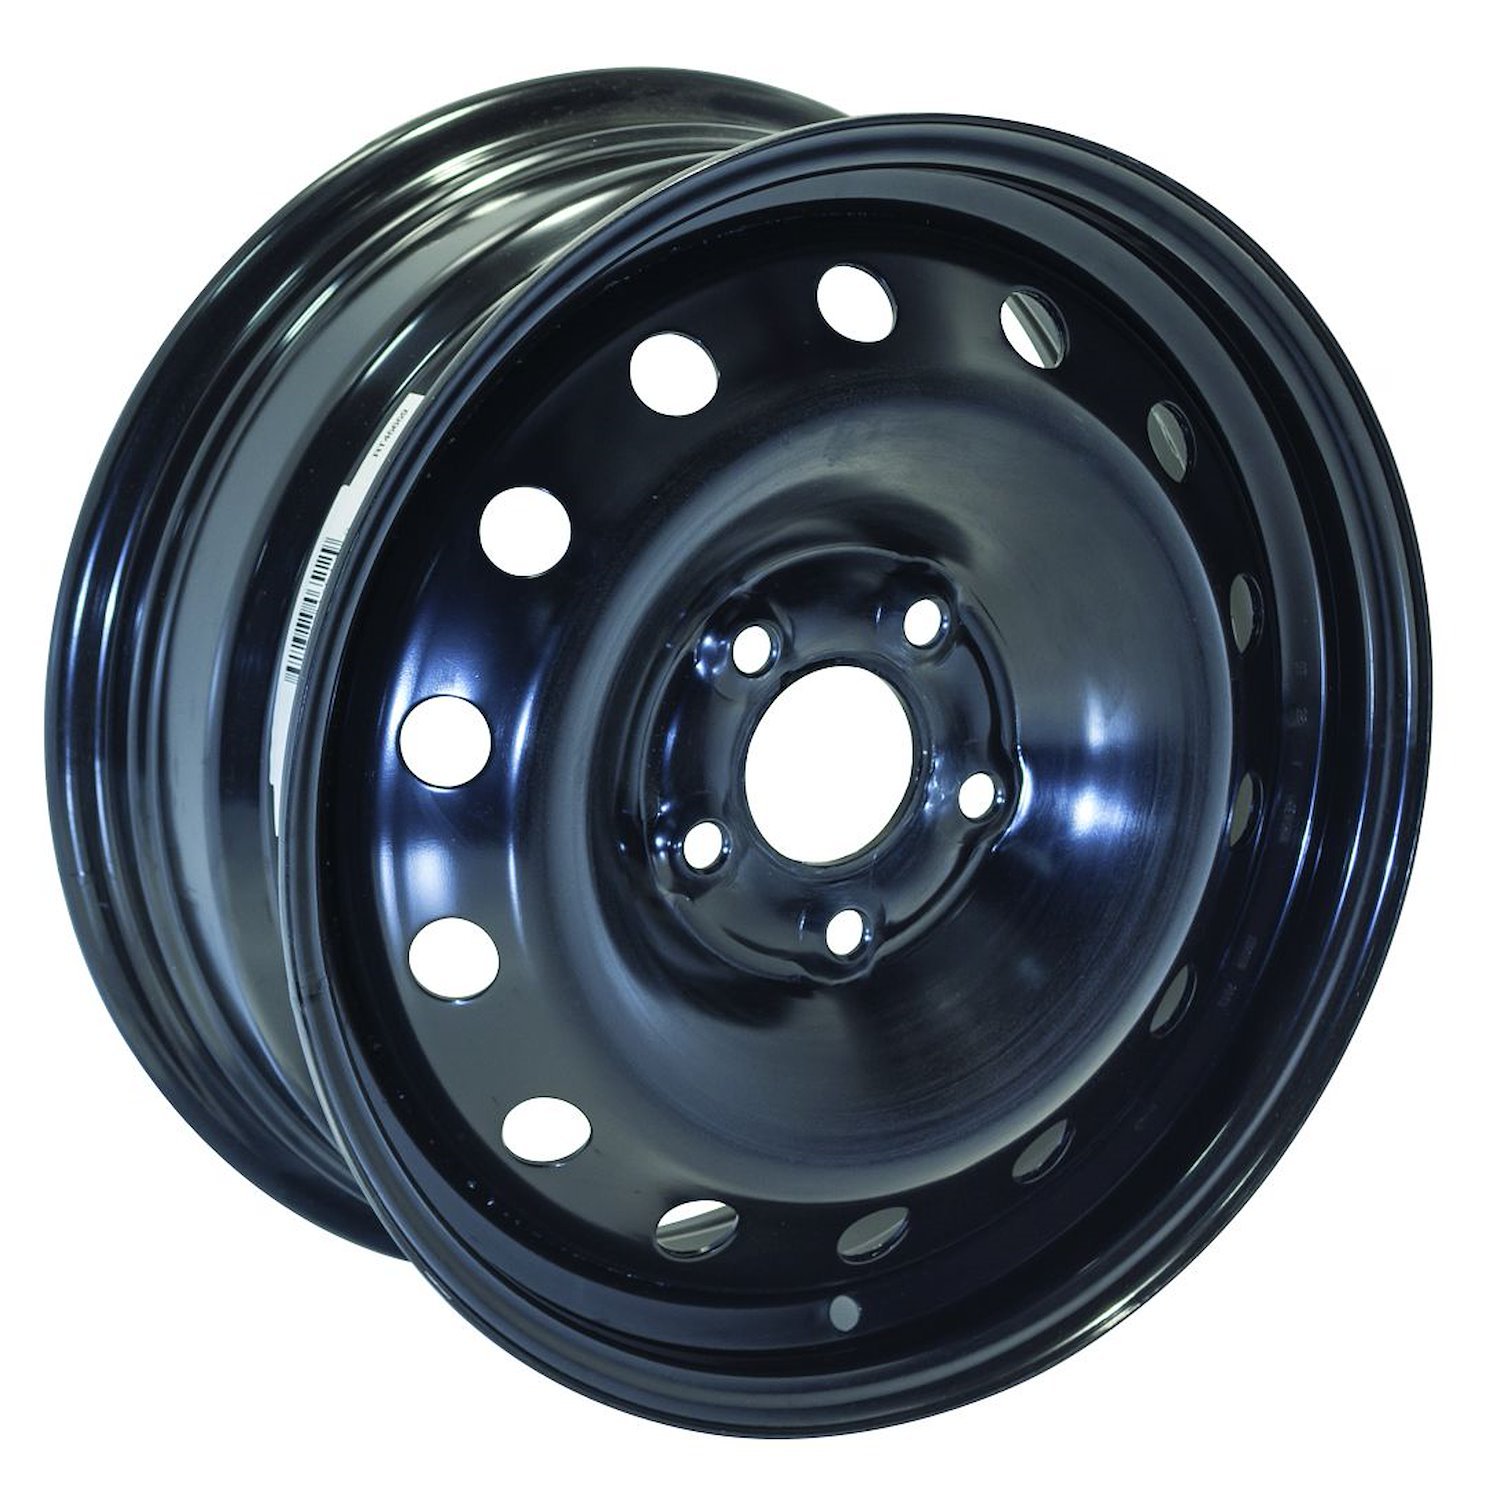 X46512 Steel Wheel [Size: 16" x 6.50"] Black Finish